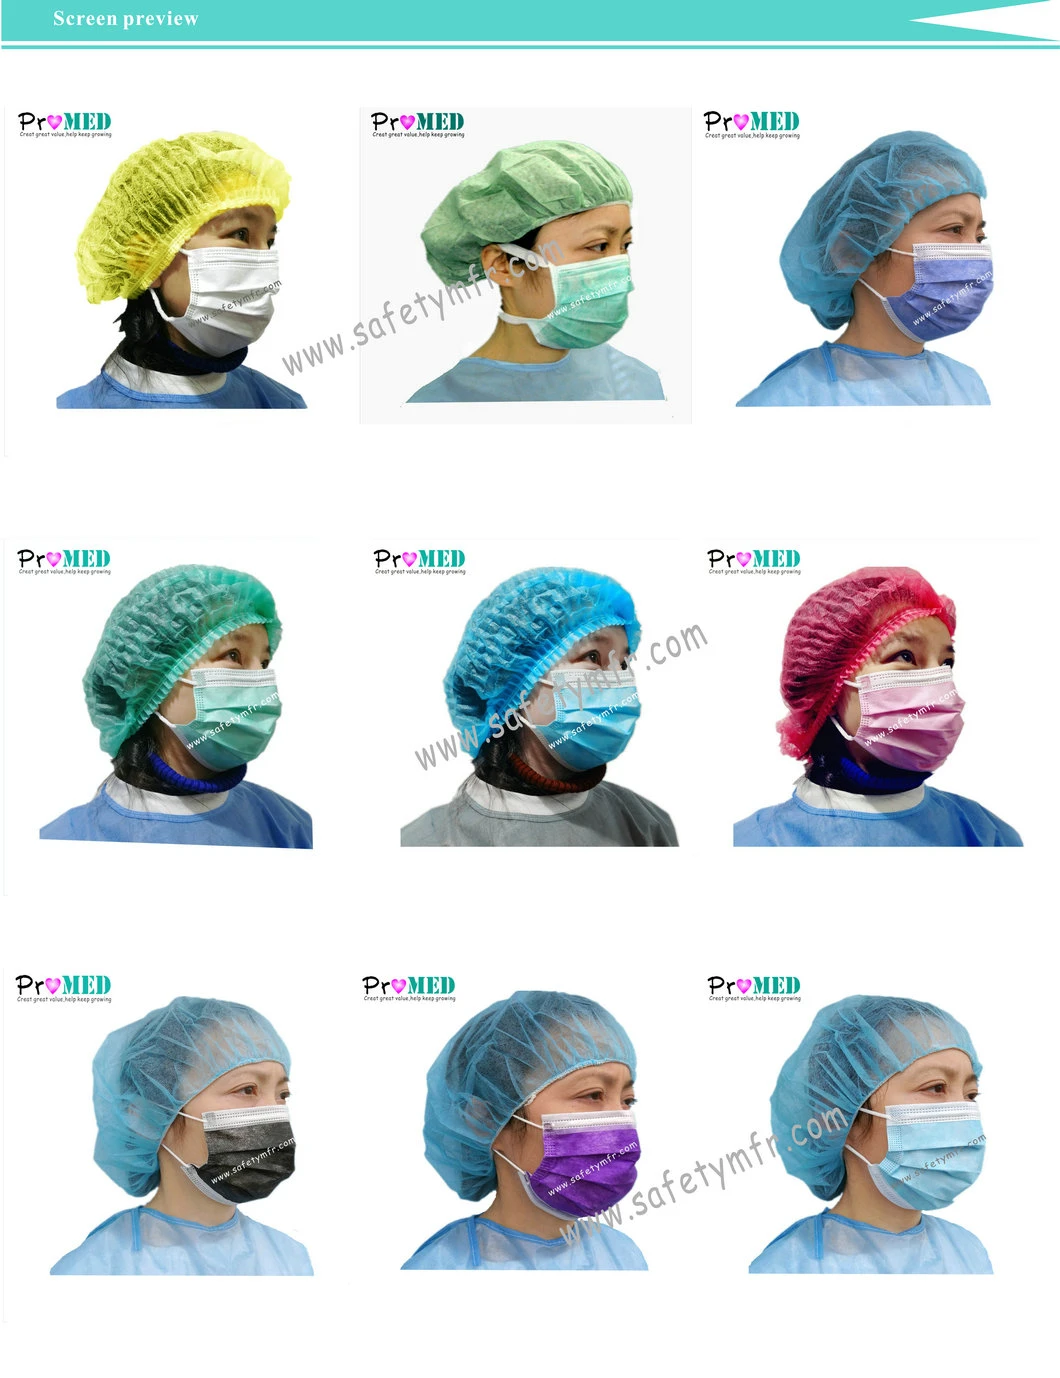 Japan market use SMS/PP/ES 2/two/Double Nose Bar, 2 nose strip, 2 nose clip Disposable Nonwoven Face Mask